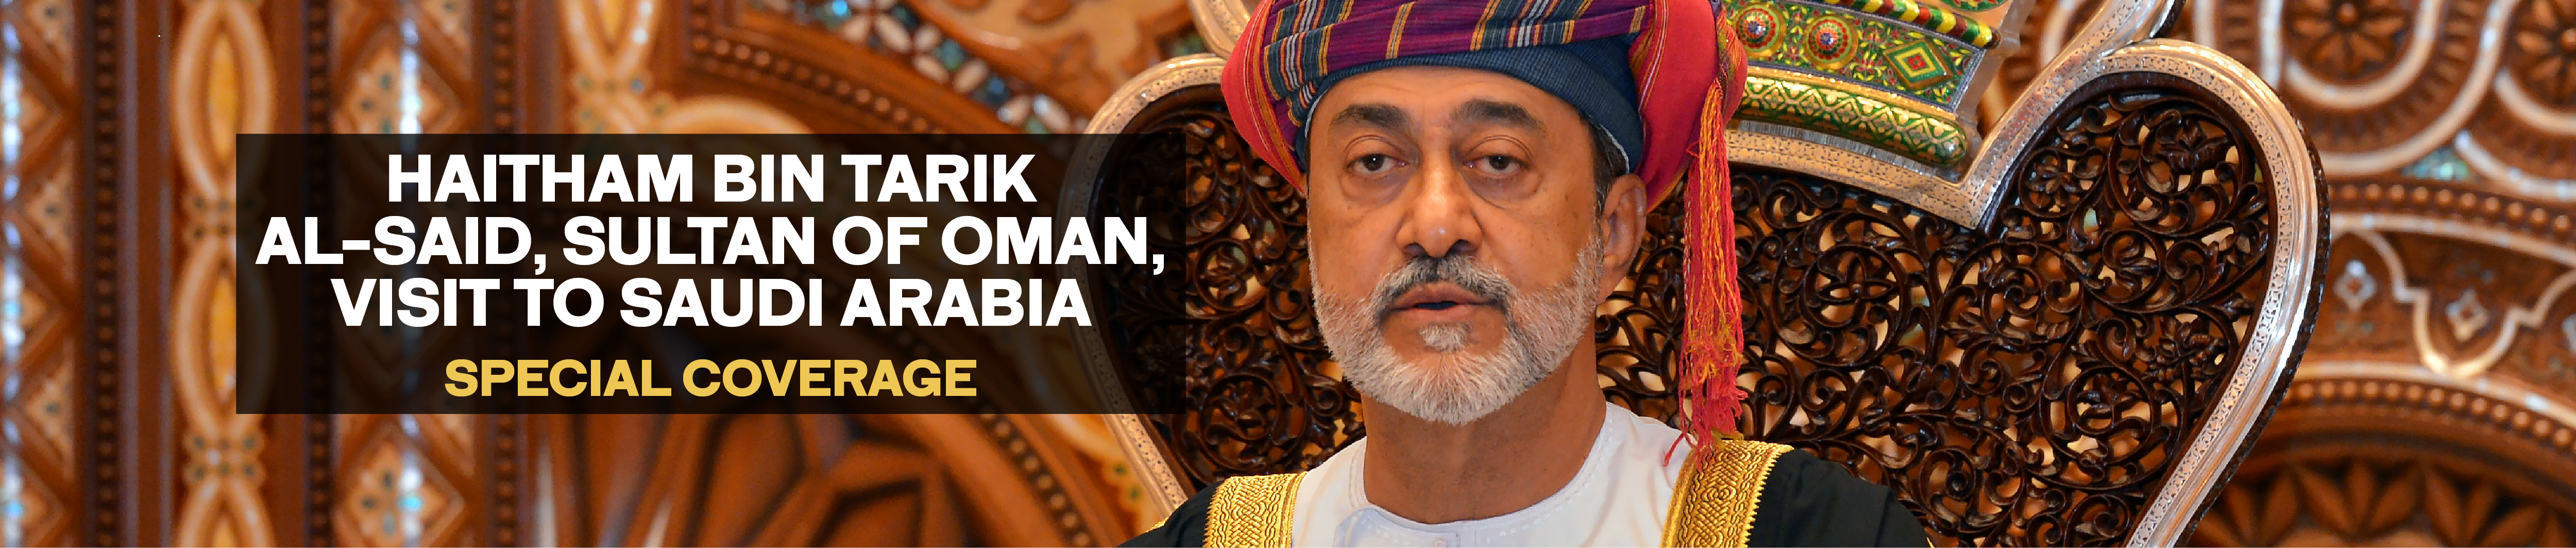 Oman Sultan in Saudi Arabia